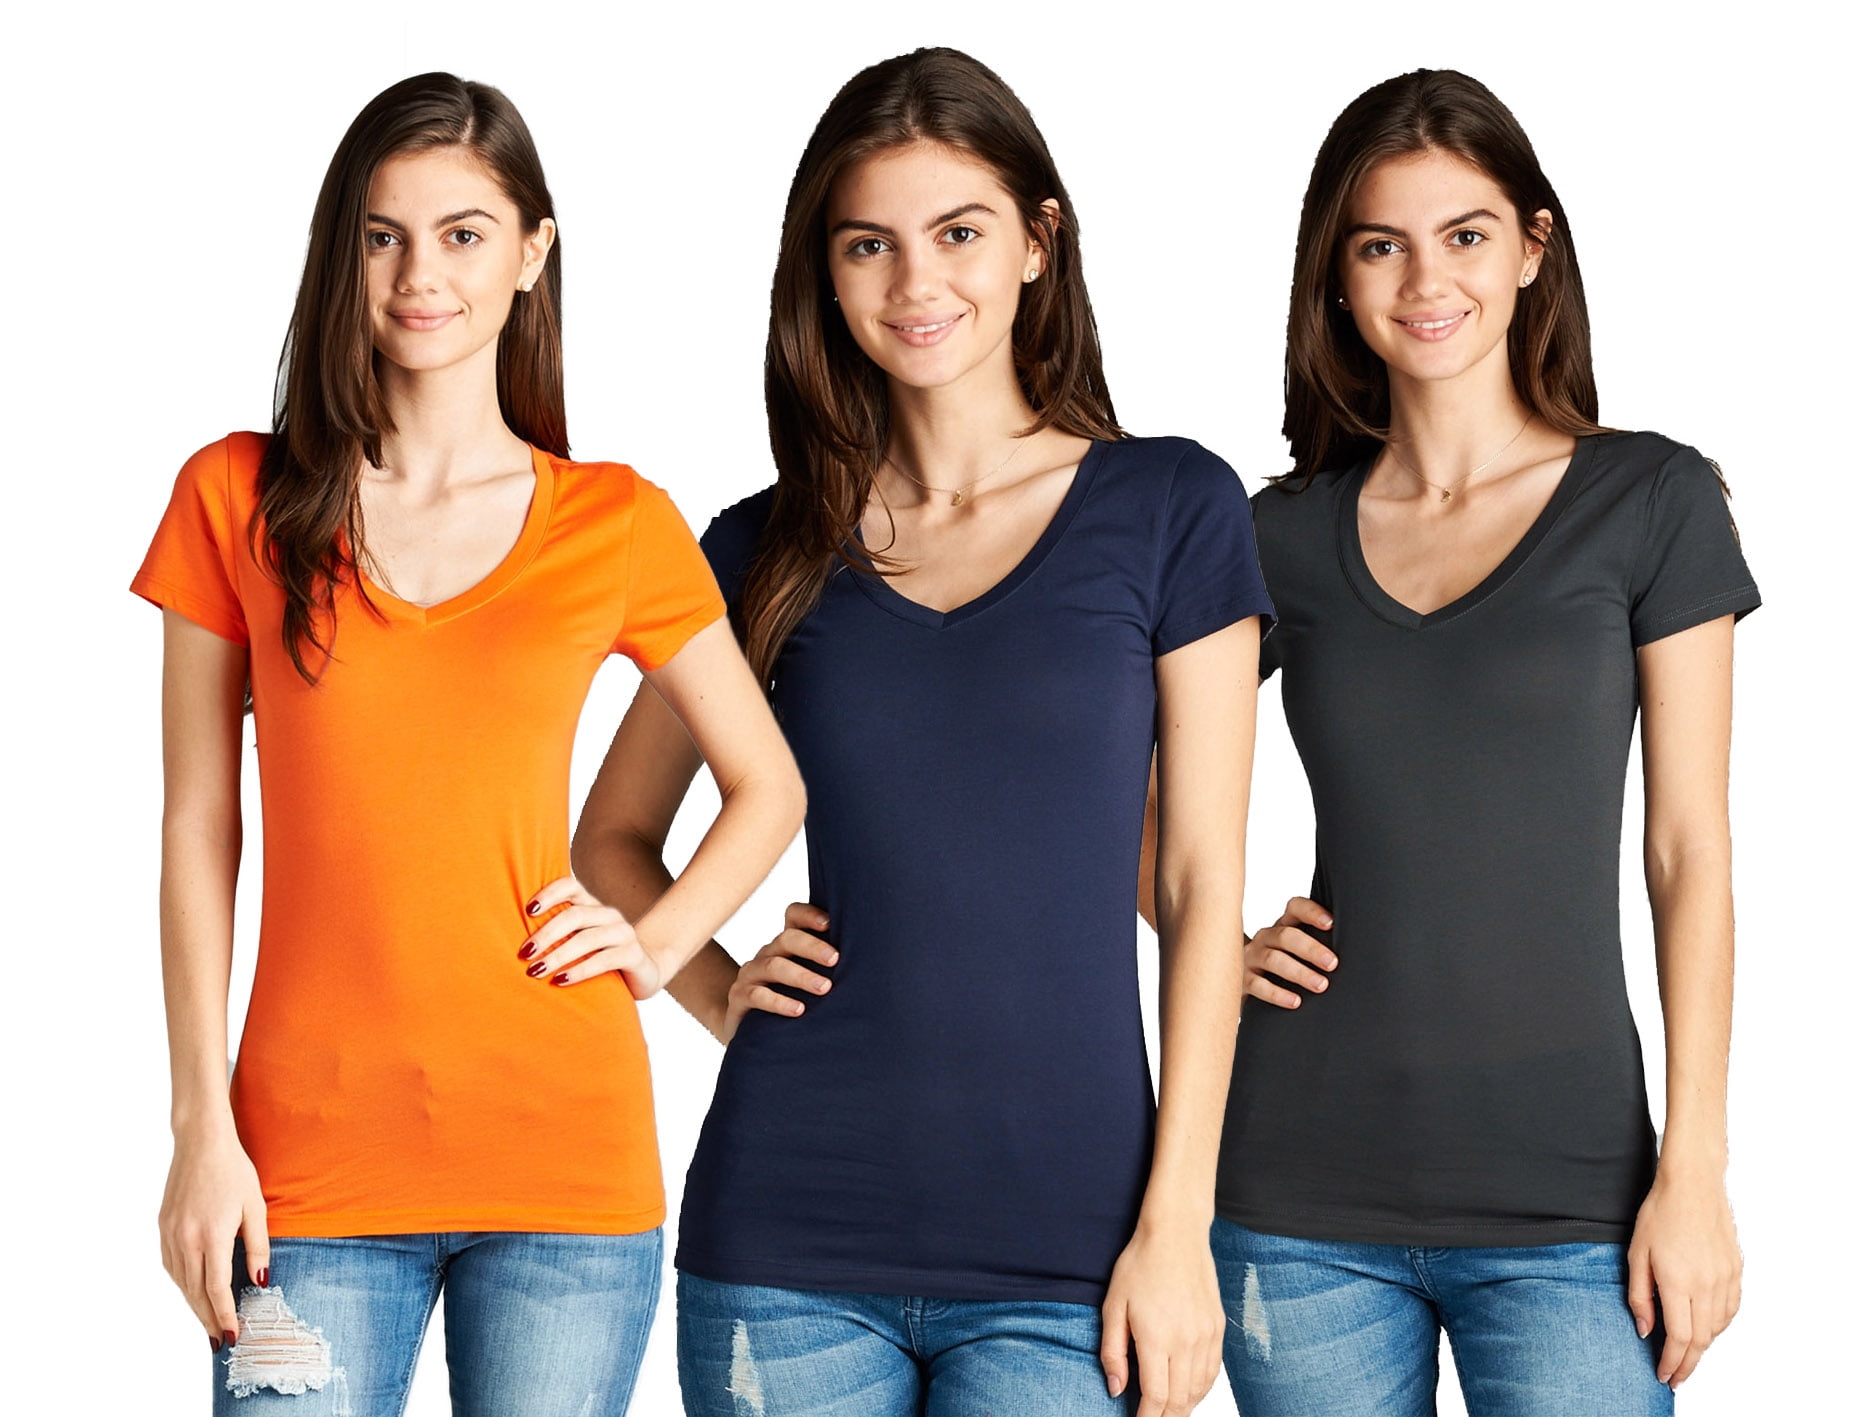 grube skam lærling Active Basic Women's V Neck T Shirts - 3 Pack Deal(Sprng Org/Navy/Chrcl-1X)  - Walmart.com